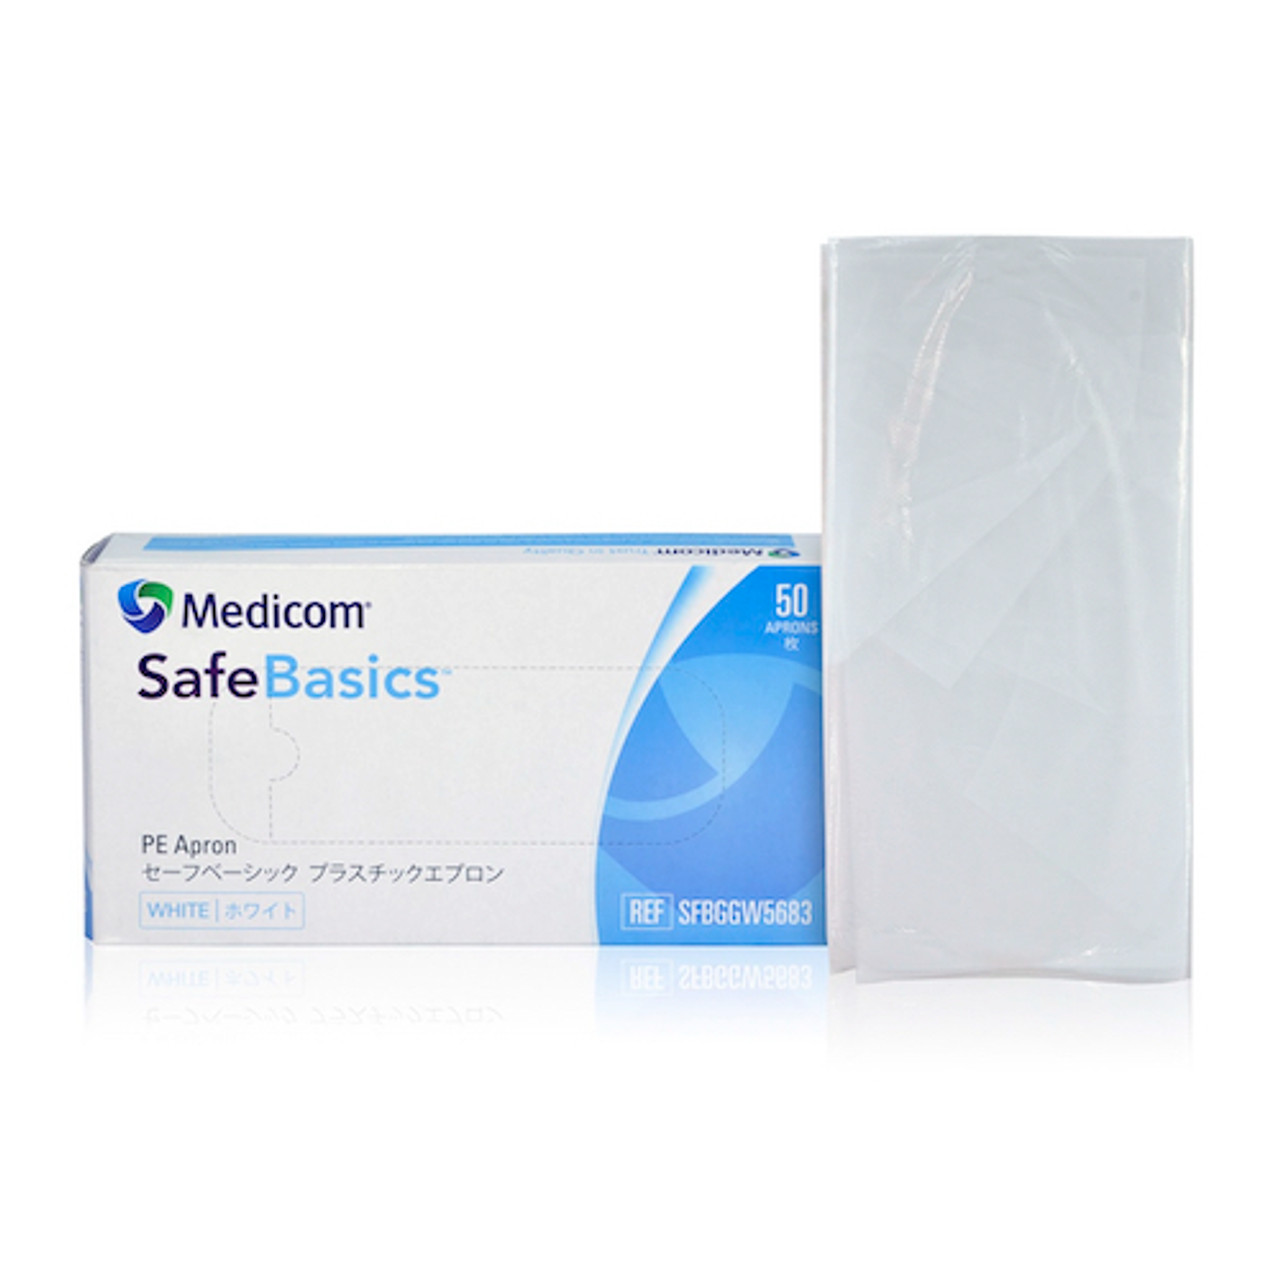 SafeBasics PE Apron Disposable White 50/box (MED5683)